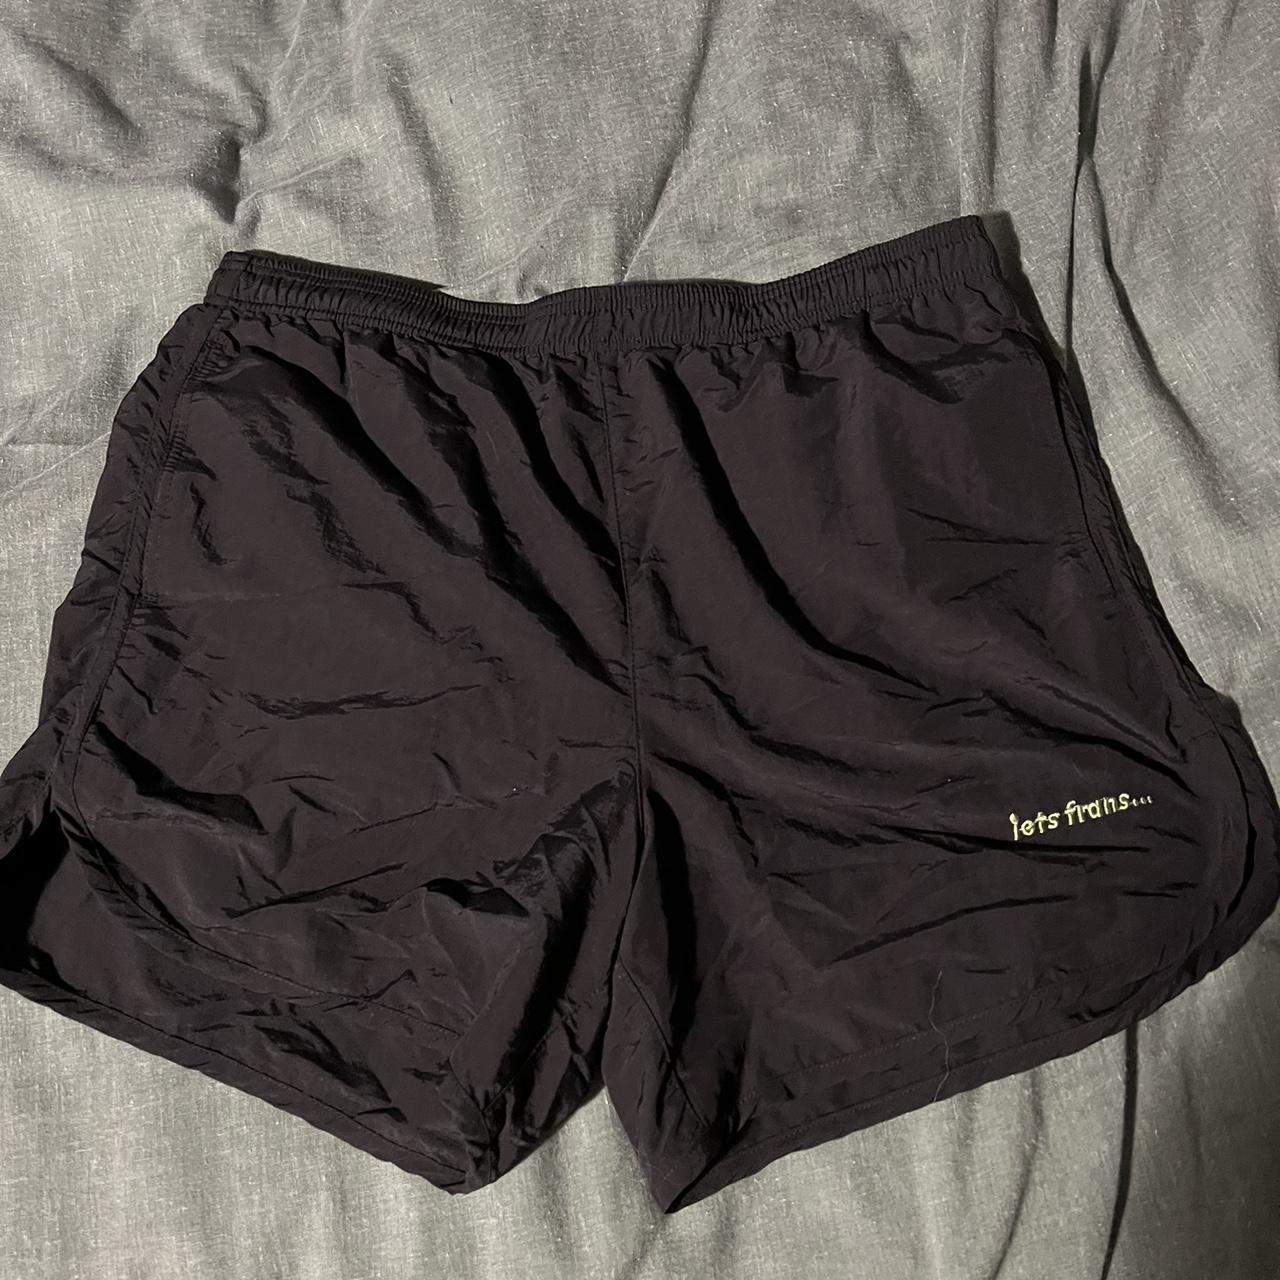 Iets Frans Swim shorts Size M Condition brand new - Depop